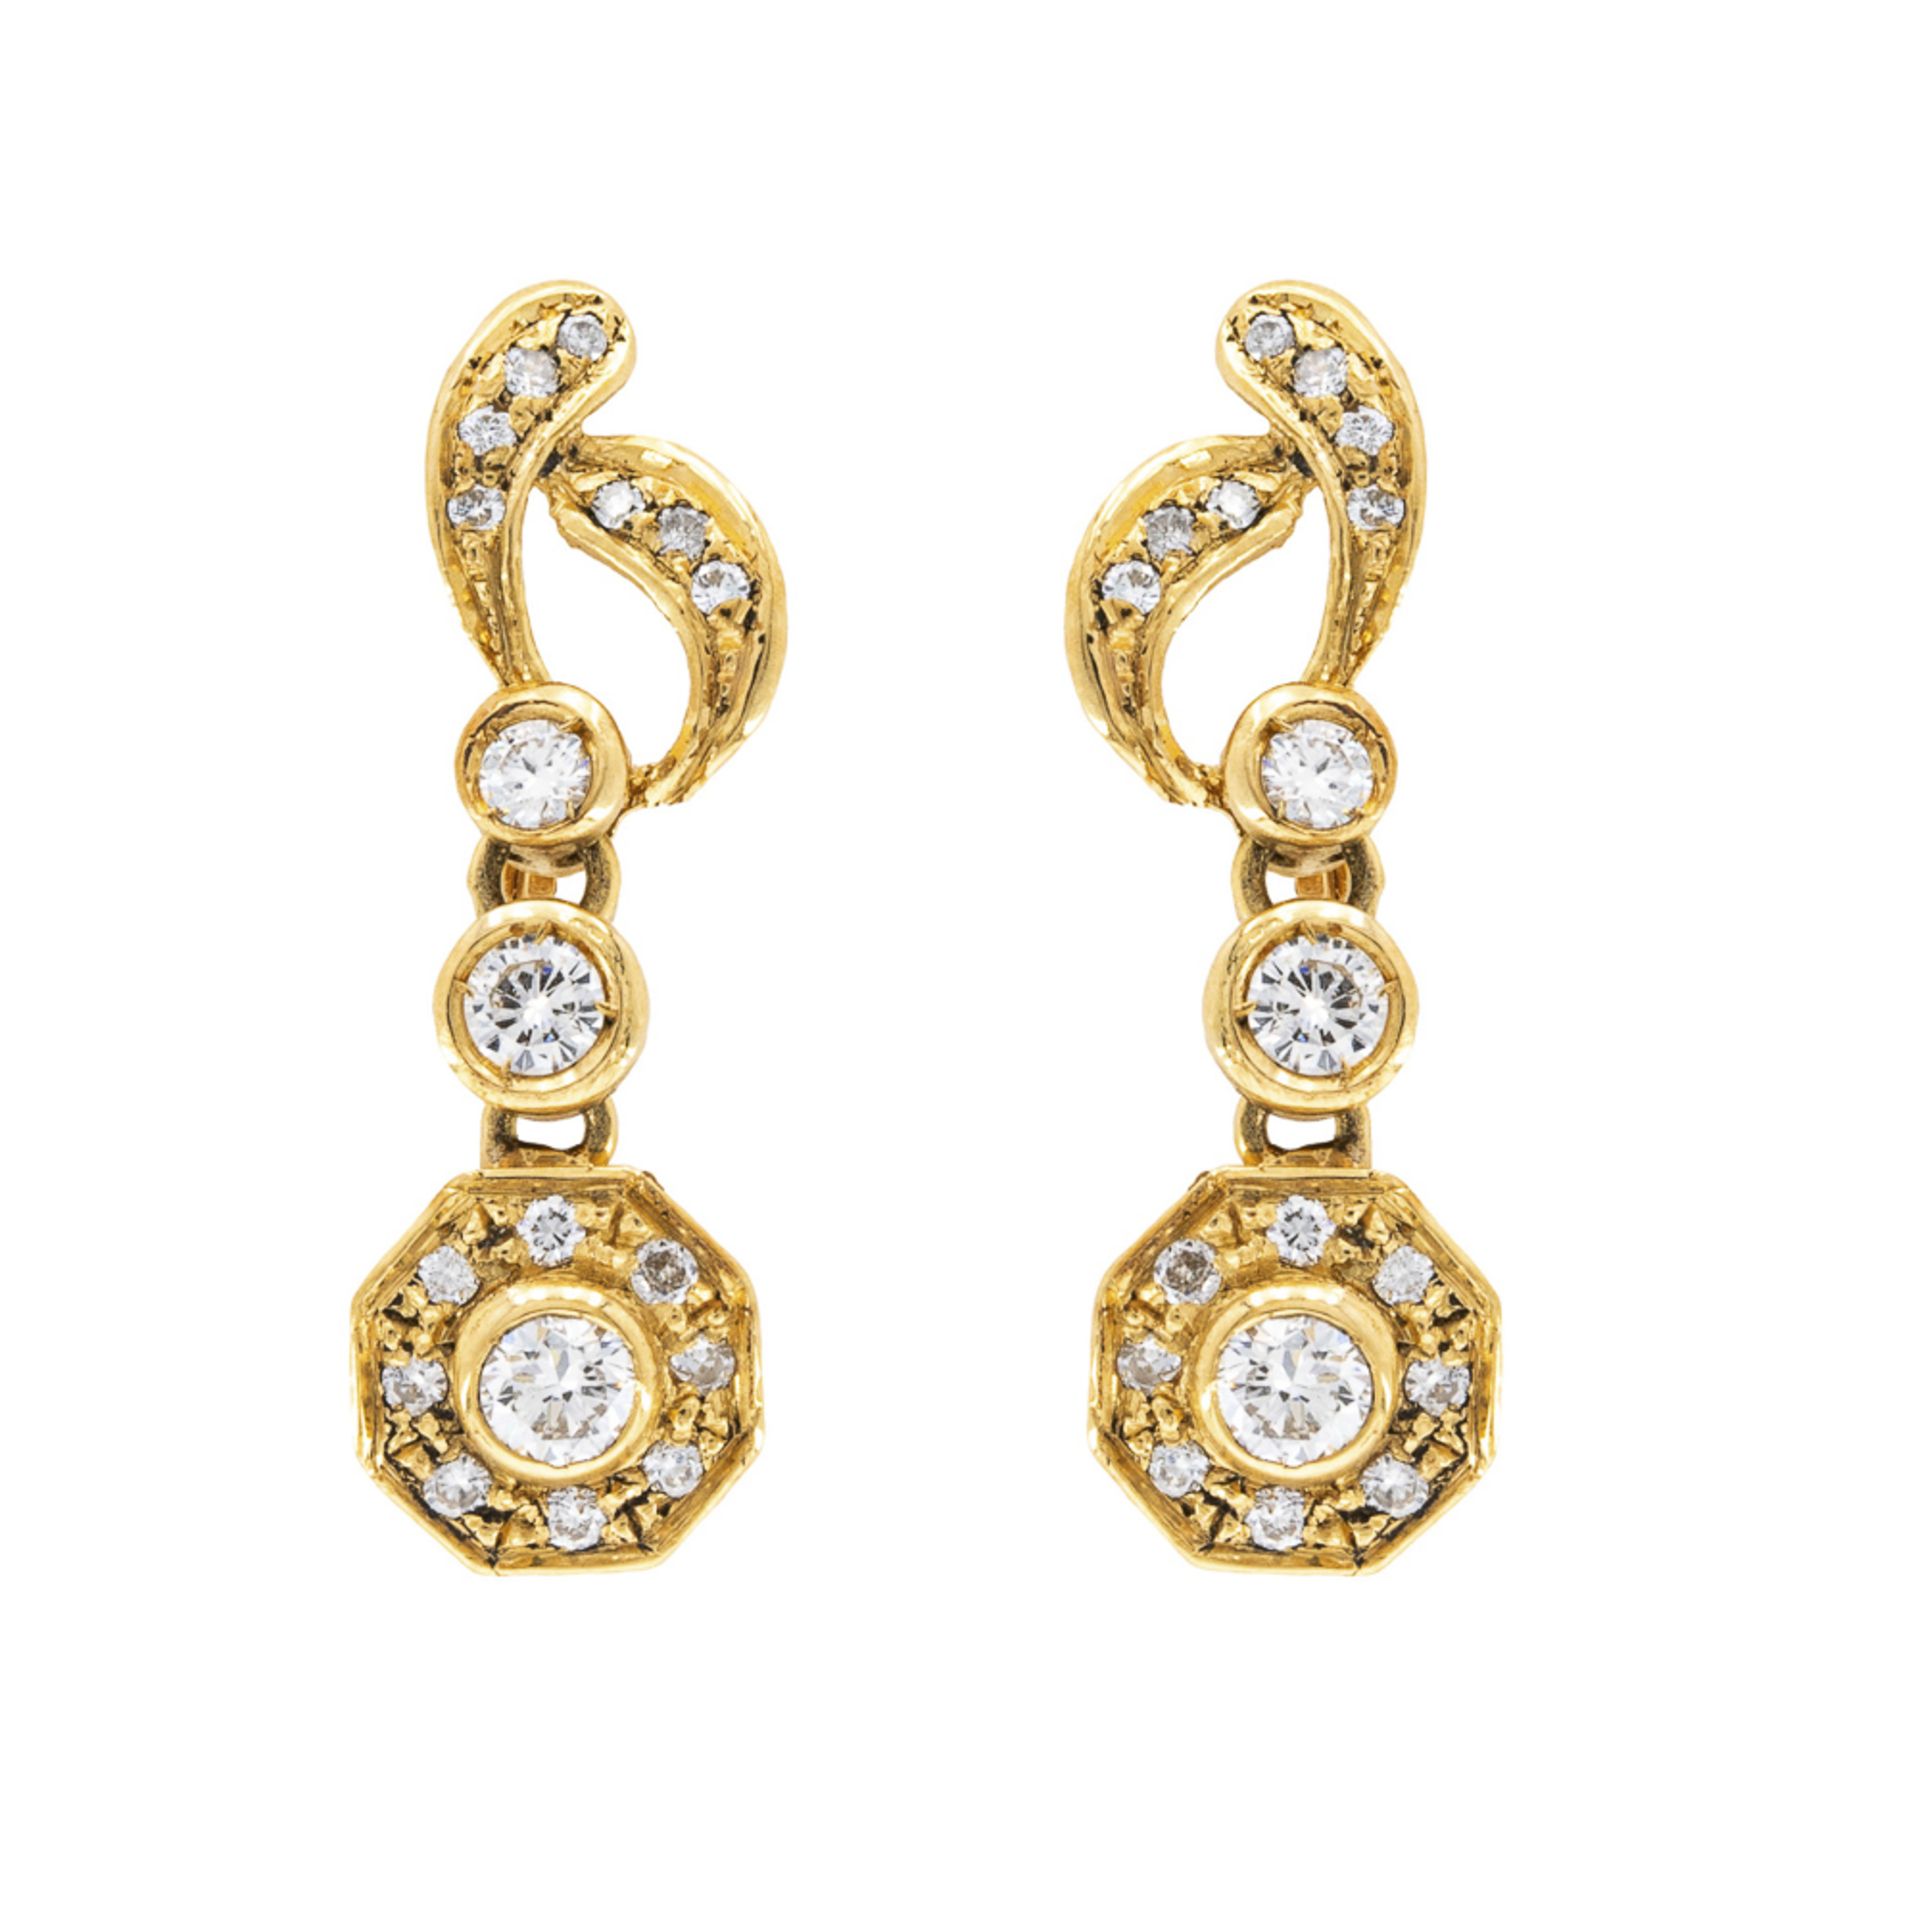 18kt yellow gold and diamonds pendant earrings